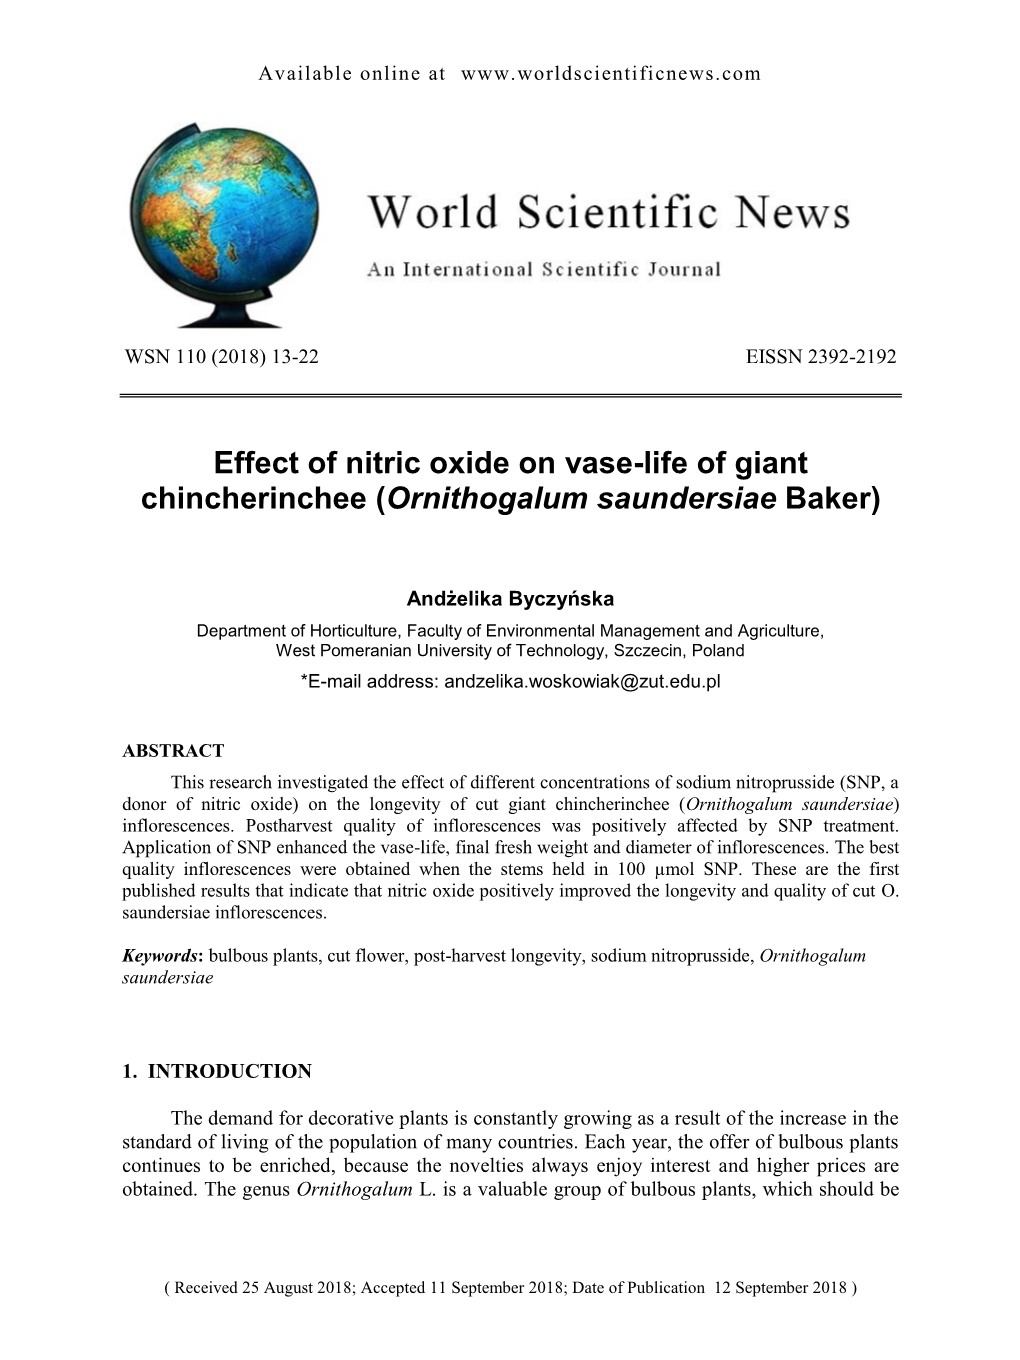 Effect of Nitric Oxide on Vase-Life of Giant Chincherinchee (Ornithogalum Saundersiae Baker)